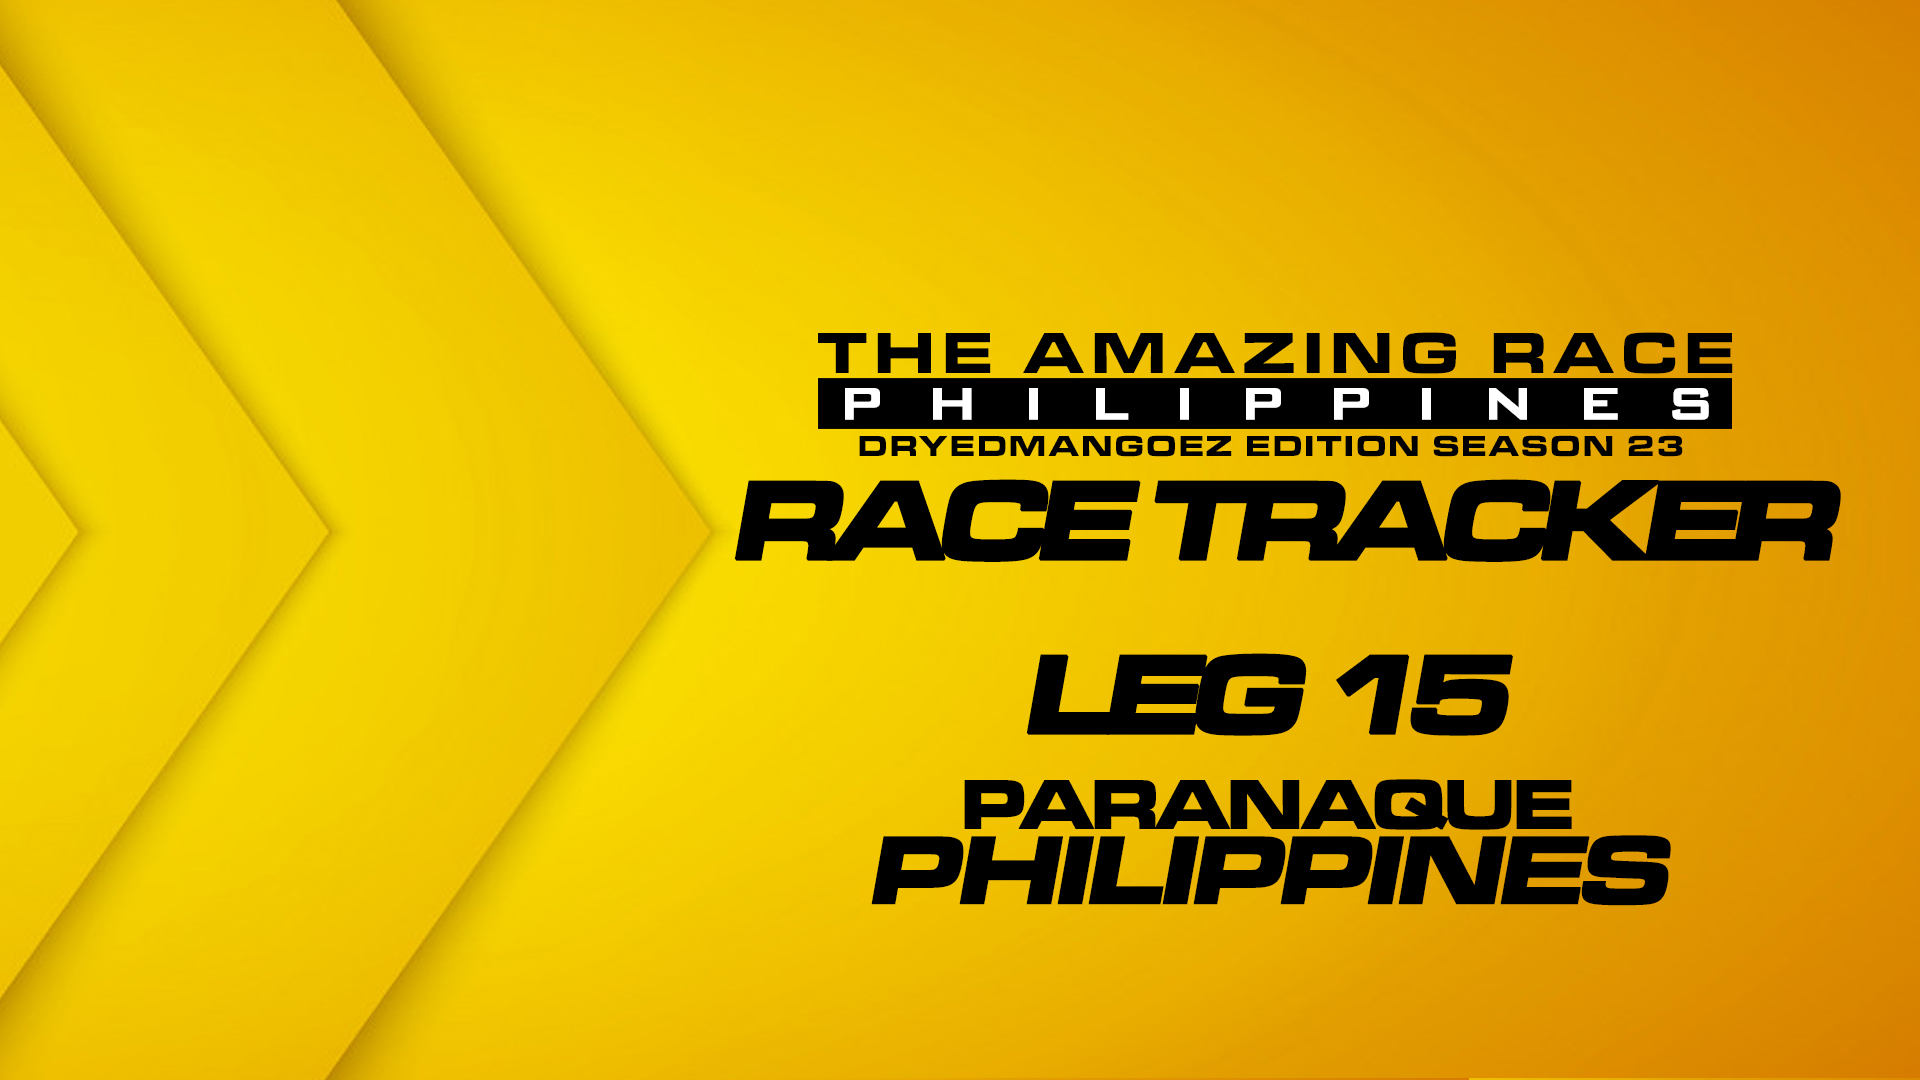 The Amazing Race Philippines: DryedMangoez Edition Season 23 Race Tracker – Leg 15